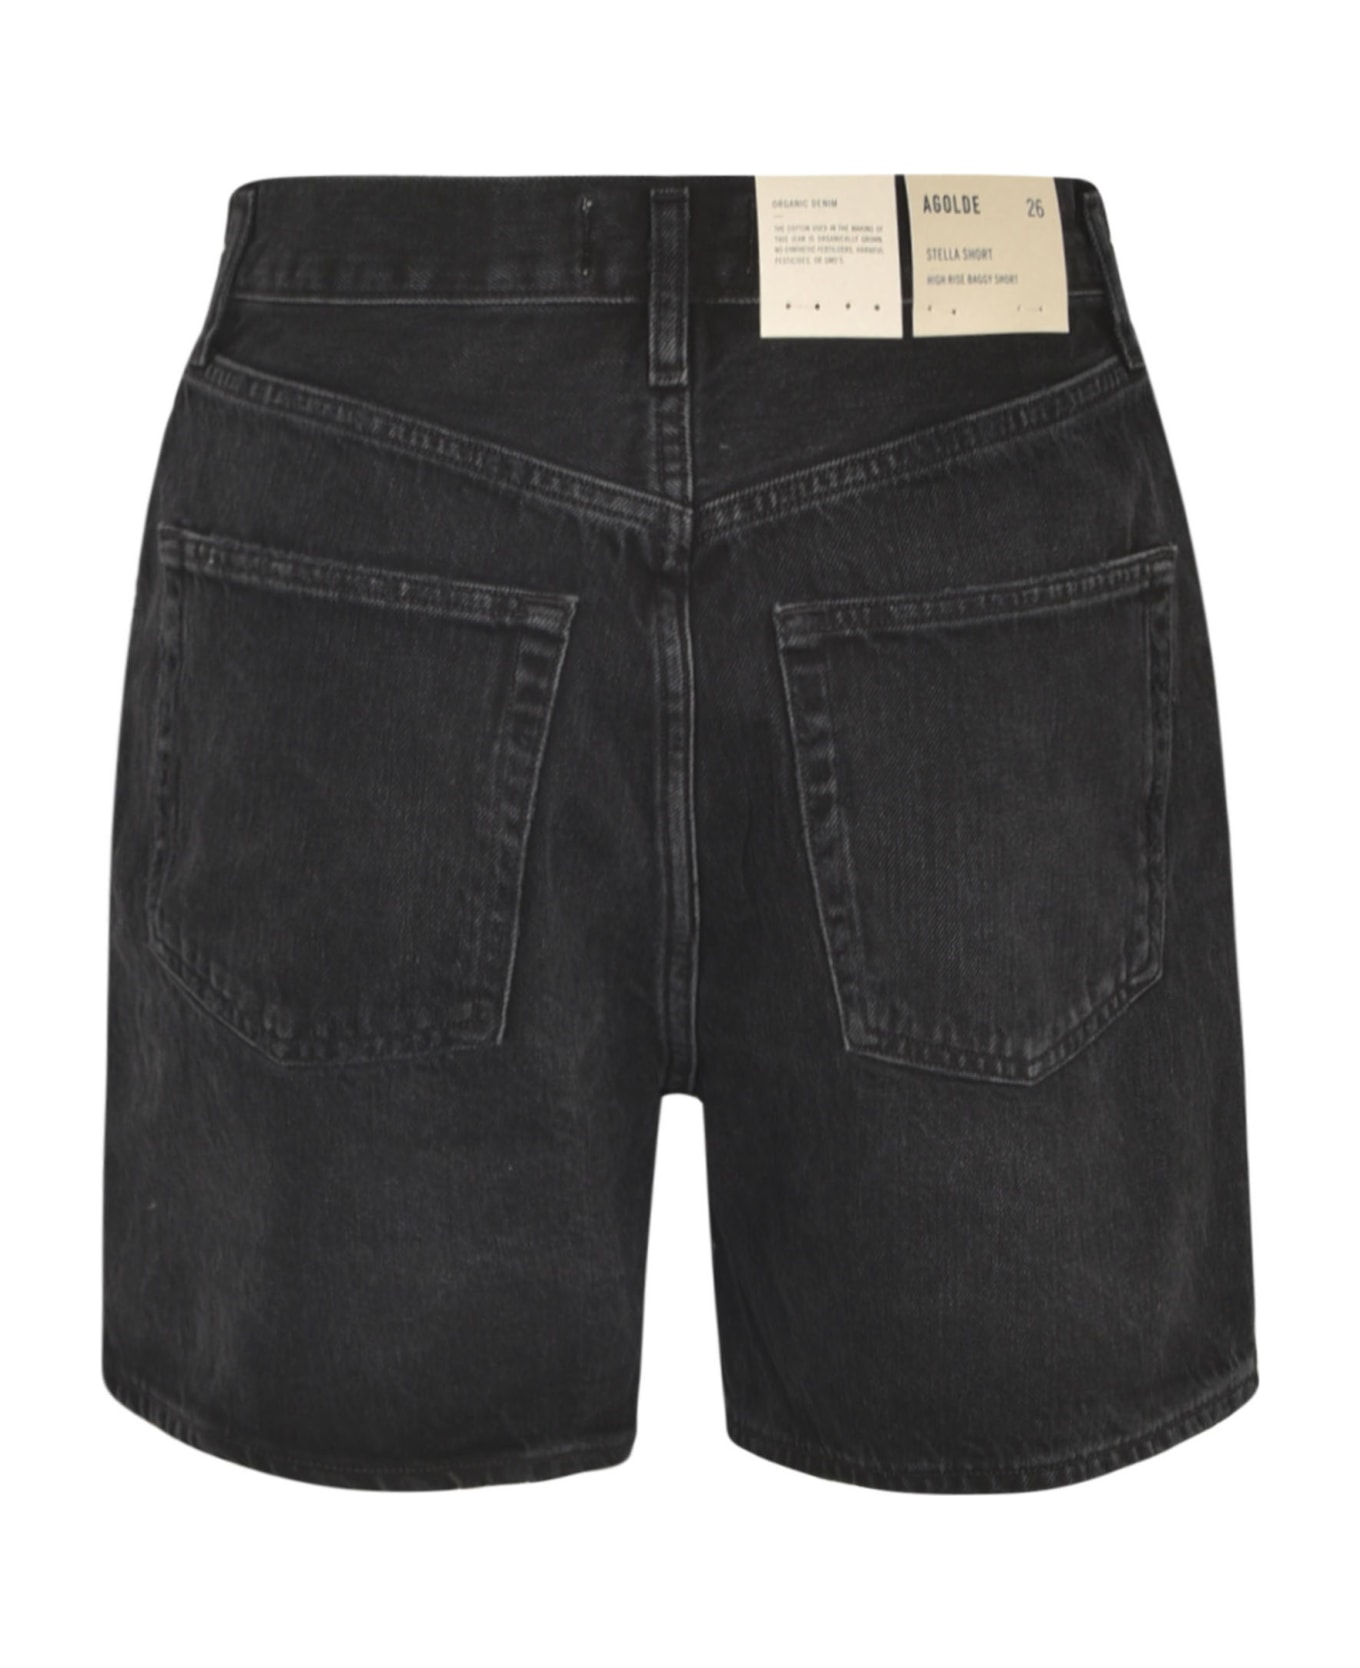 AGOLDE Buttoned Denim Shorts - BLACK